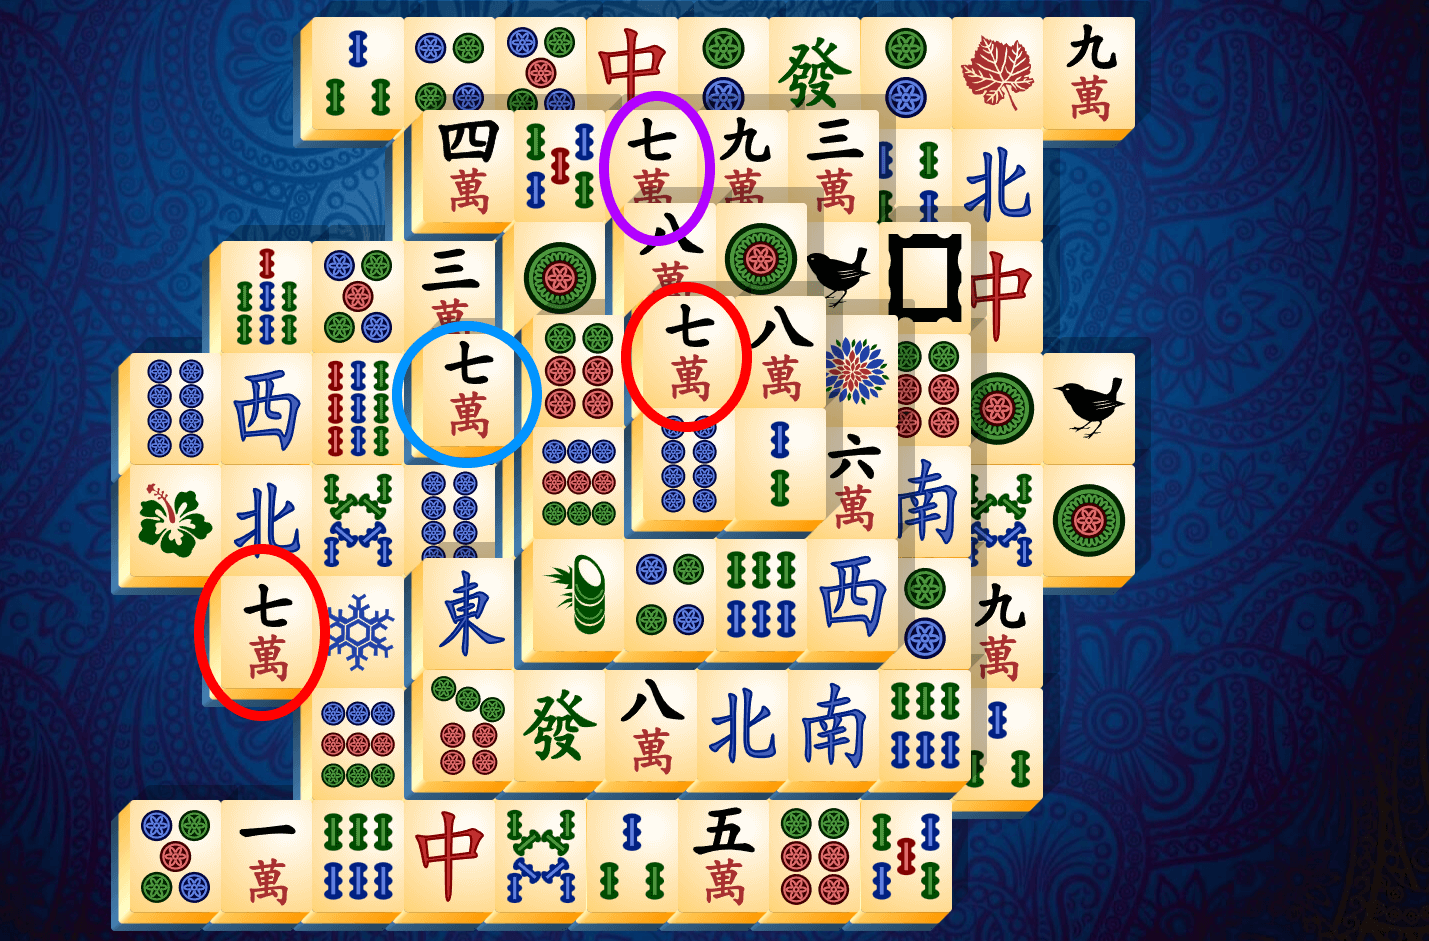 Tutorial Mahjong Solitario, fase 9